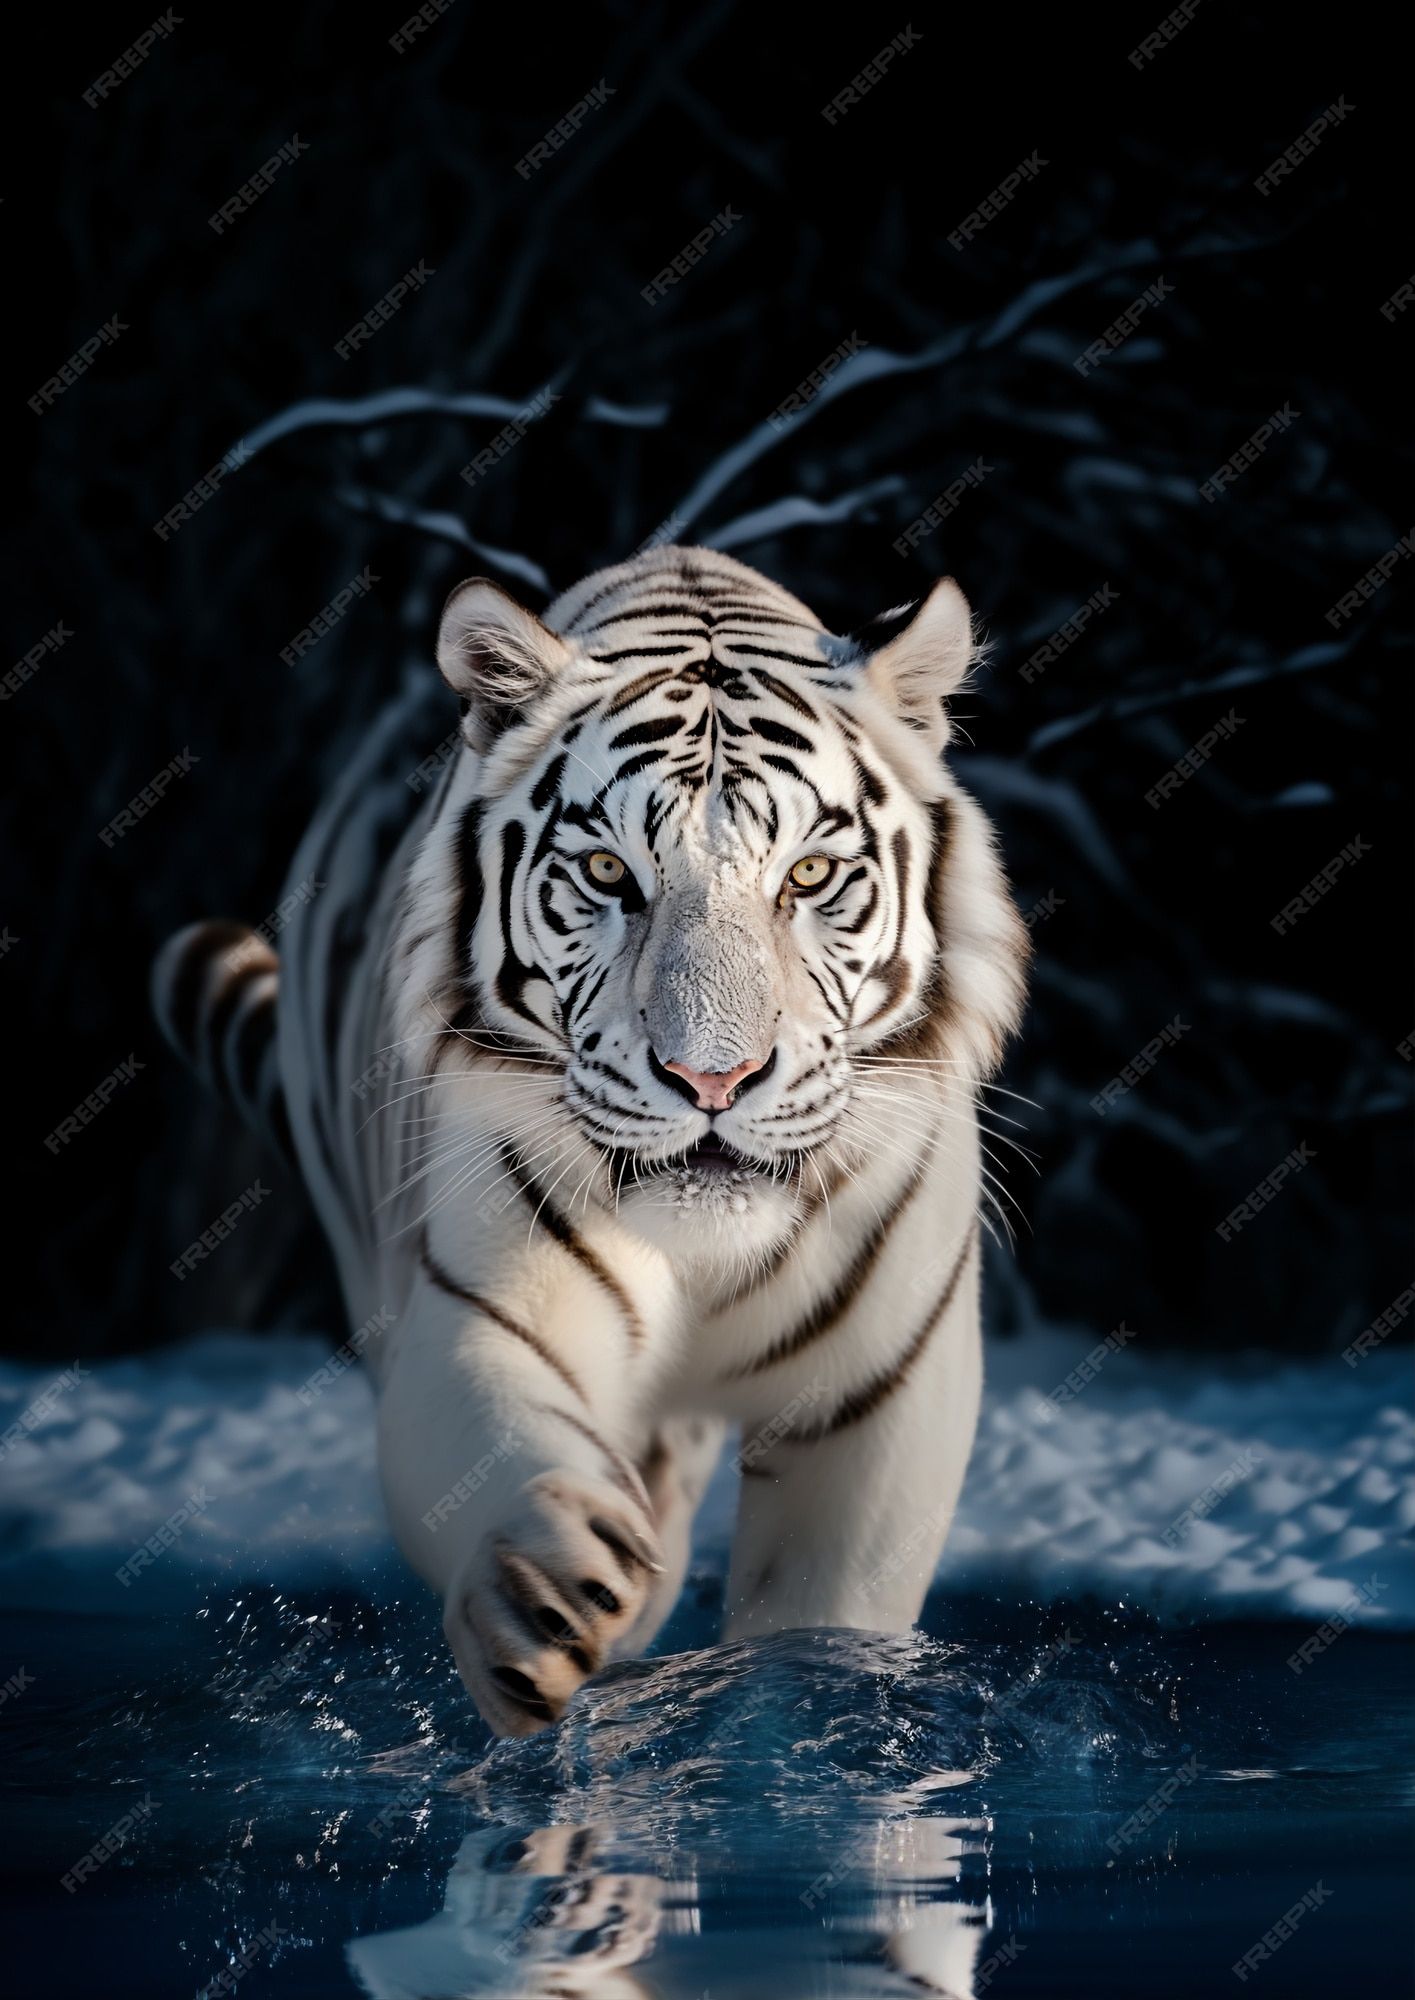 Cool Tiger Wallpaper Image